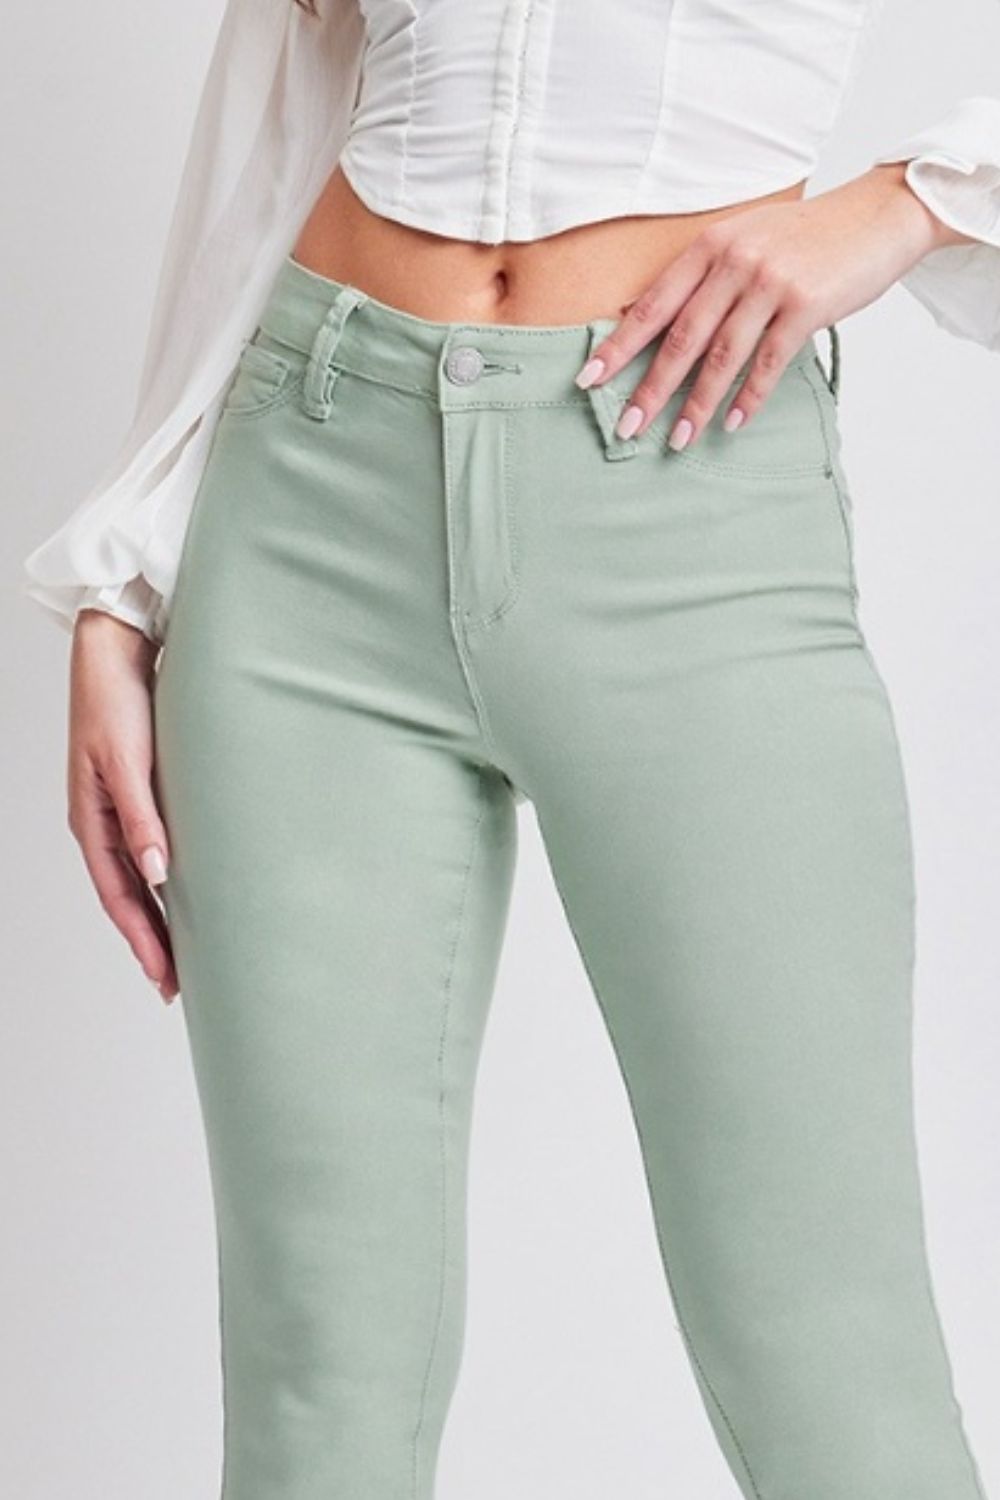 YMI Jeanswear Hyperstretch Mid-Rise Skinny Jeans Trendsi